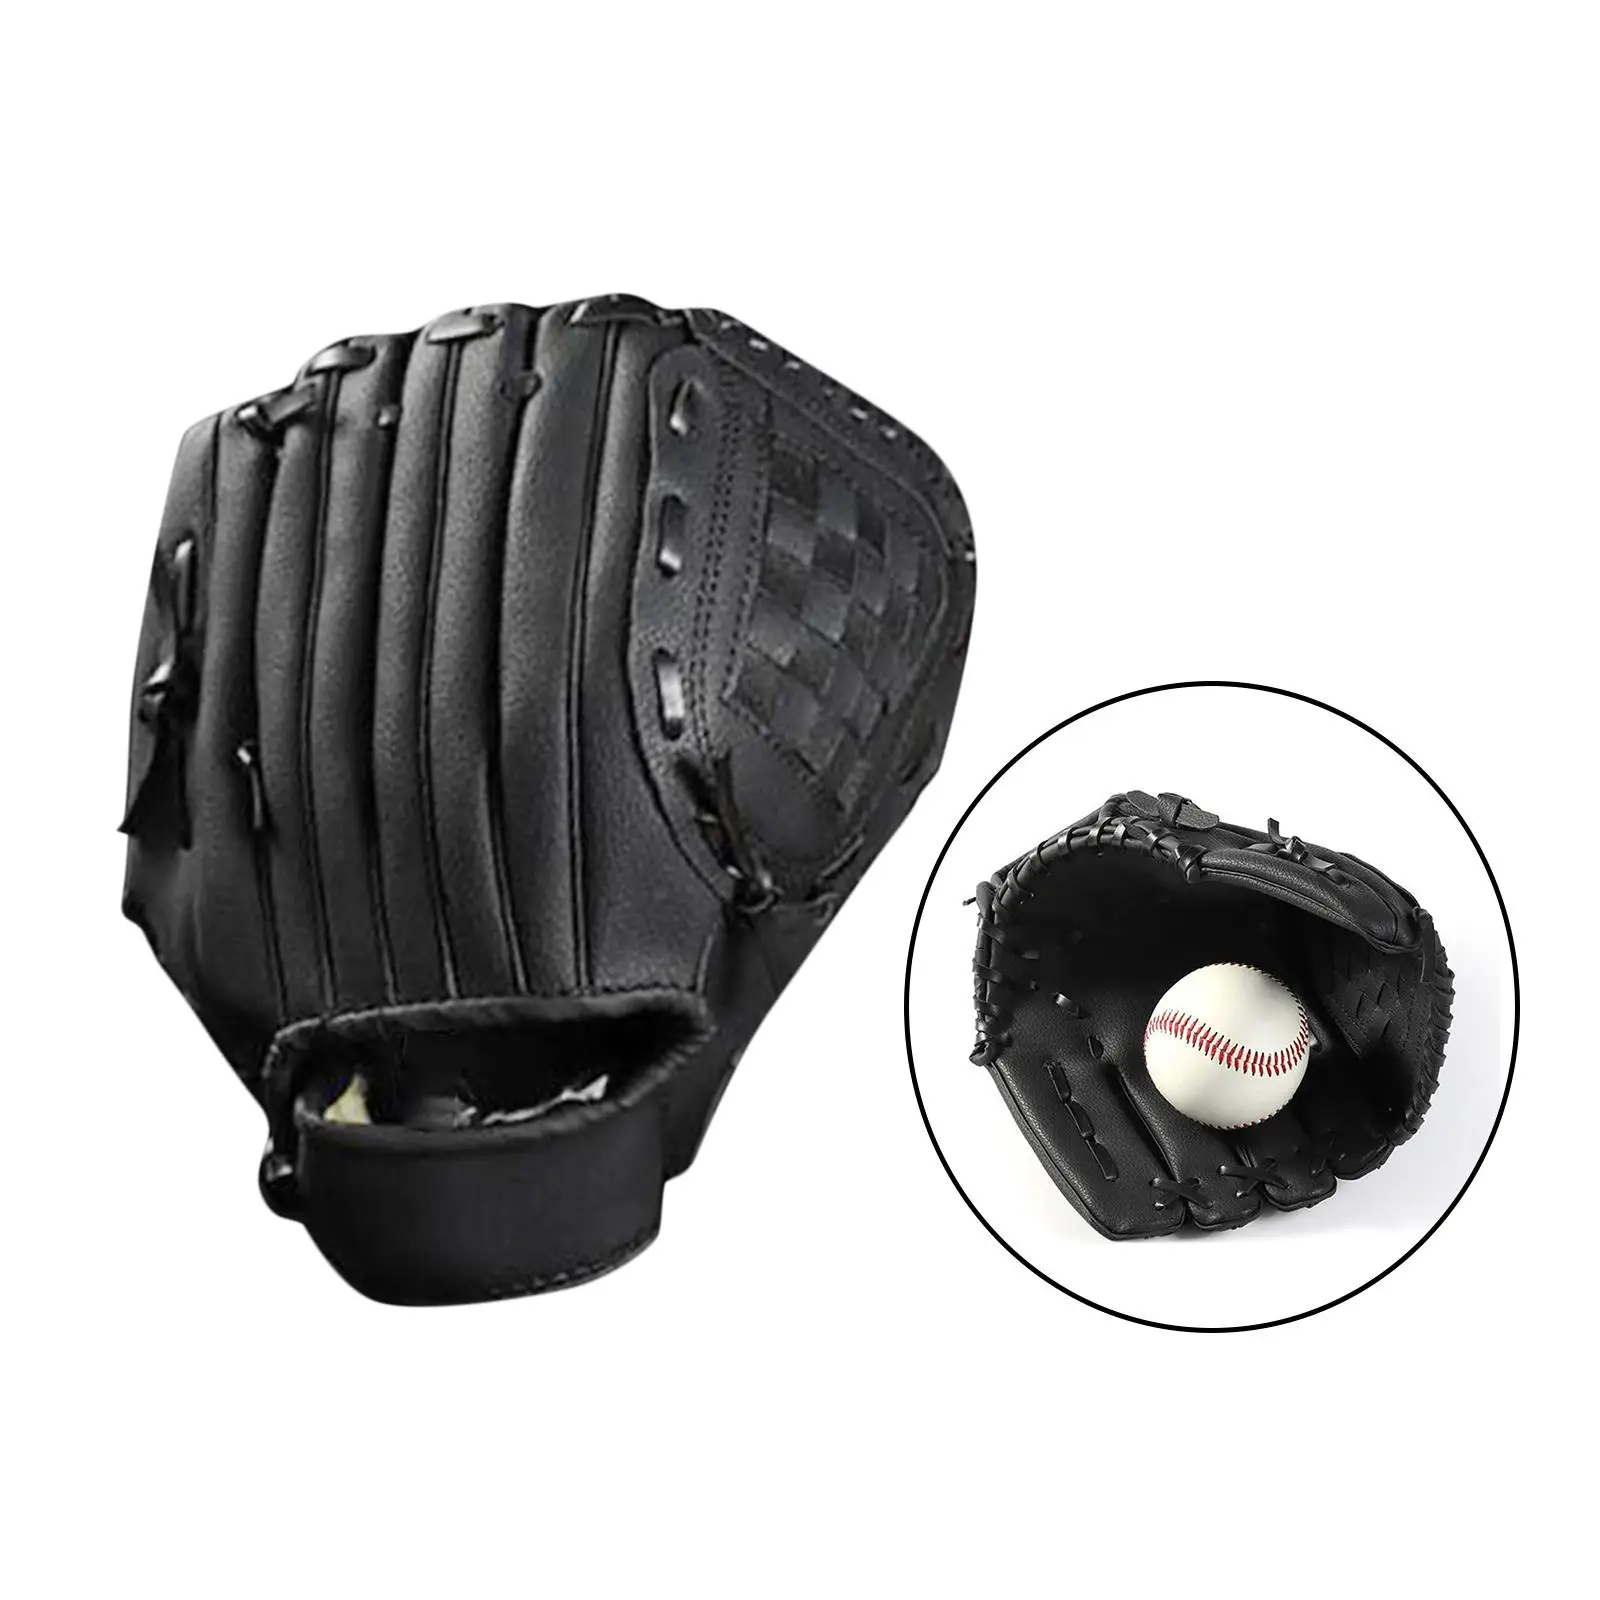 Baseball Glove Infield Pitcher Baseball Gloves PU Leather Thickened Softball Glove for Batting Sports Youth Adult Kids Backyard